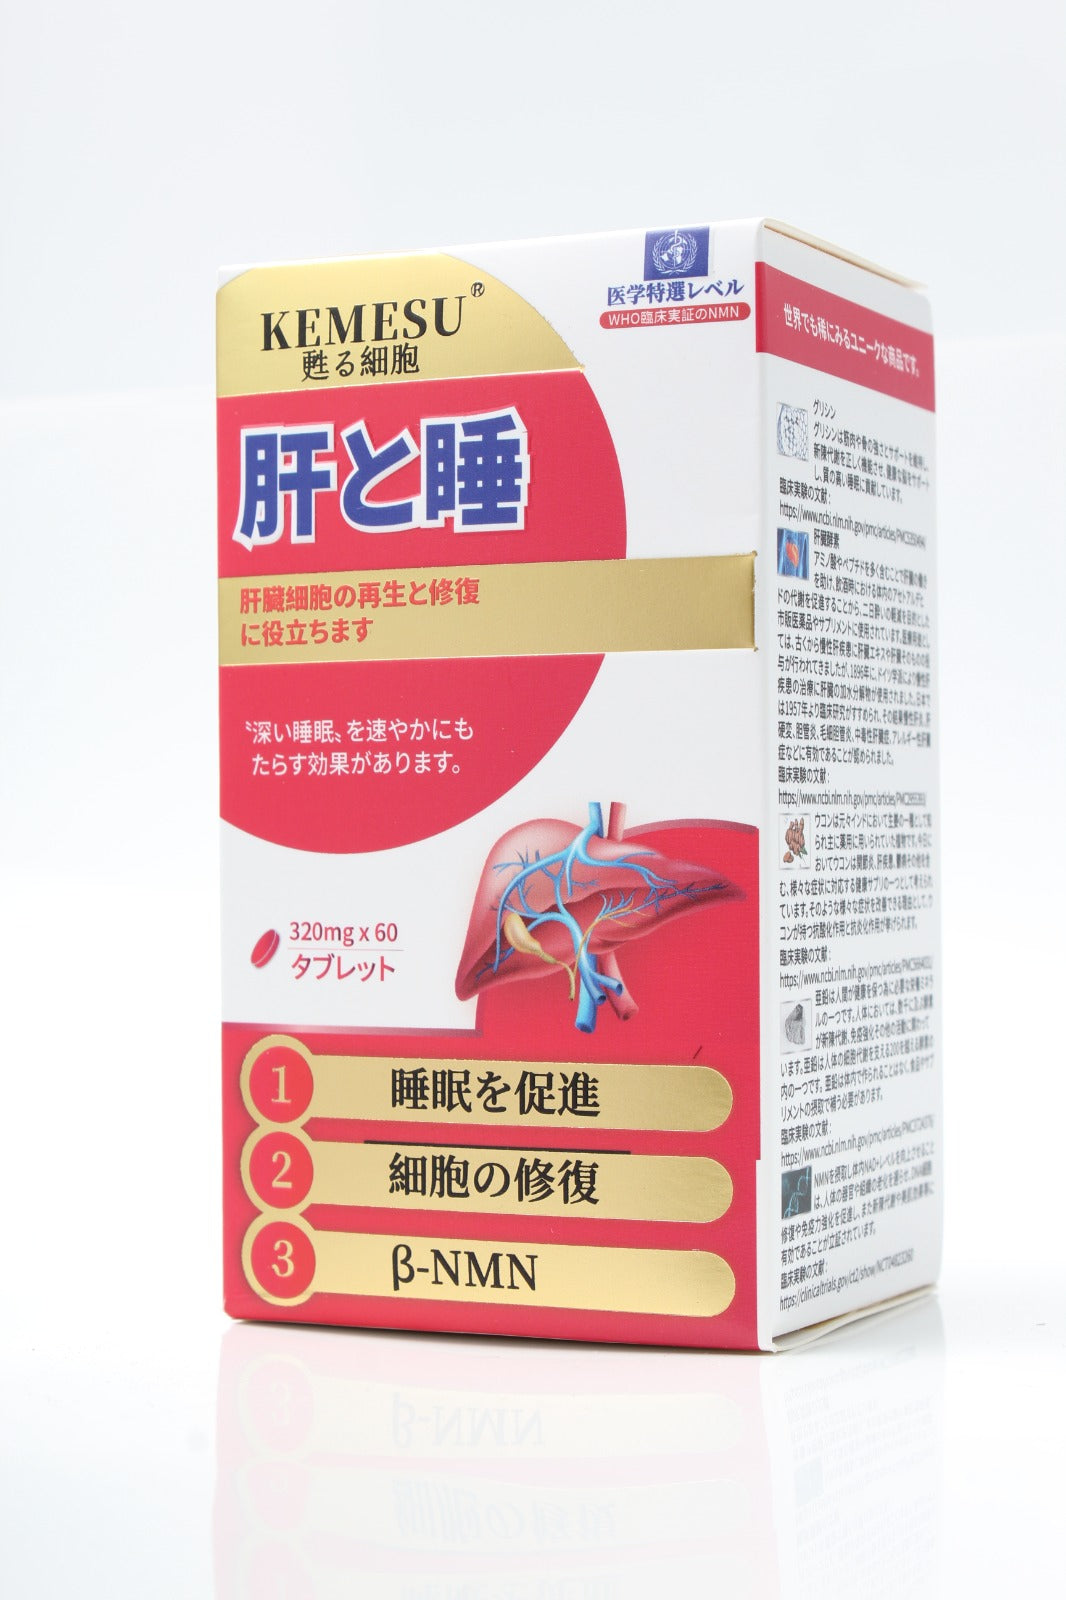 KEMESU Cell Awakening - Liver Protection Formula (320MG